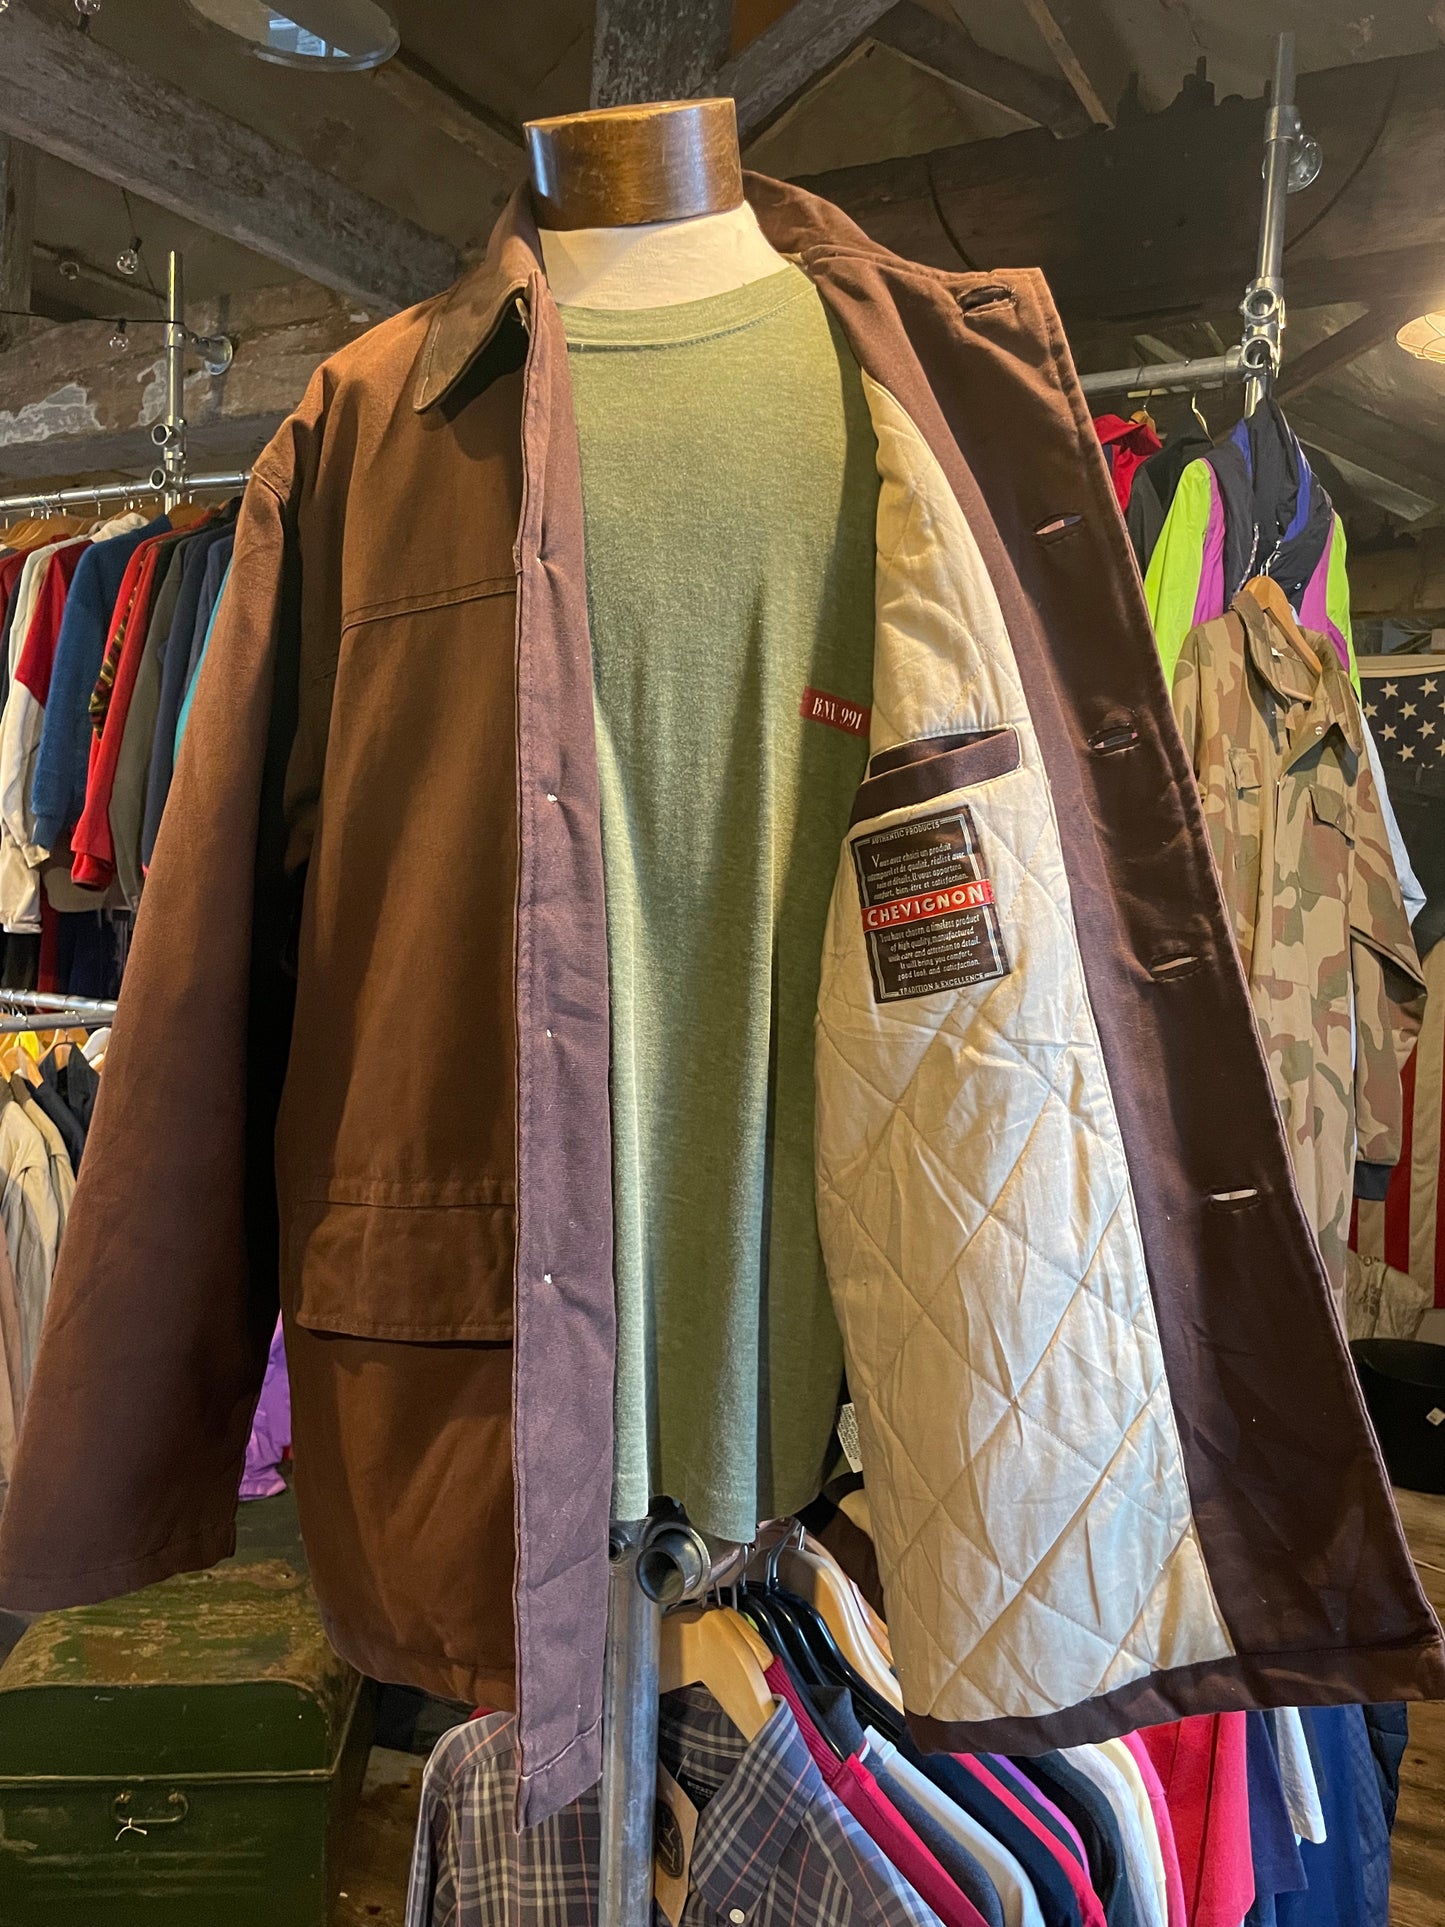 90s Chevignon workwear canvas jacket (L)